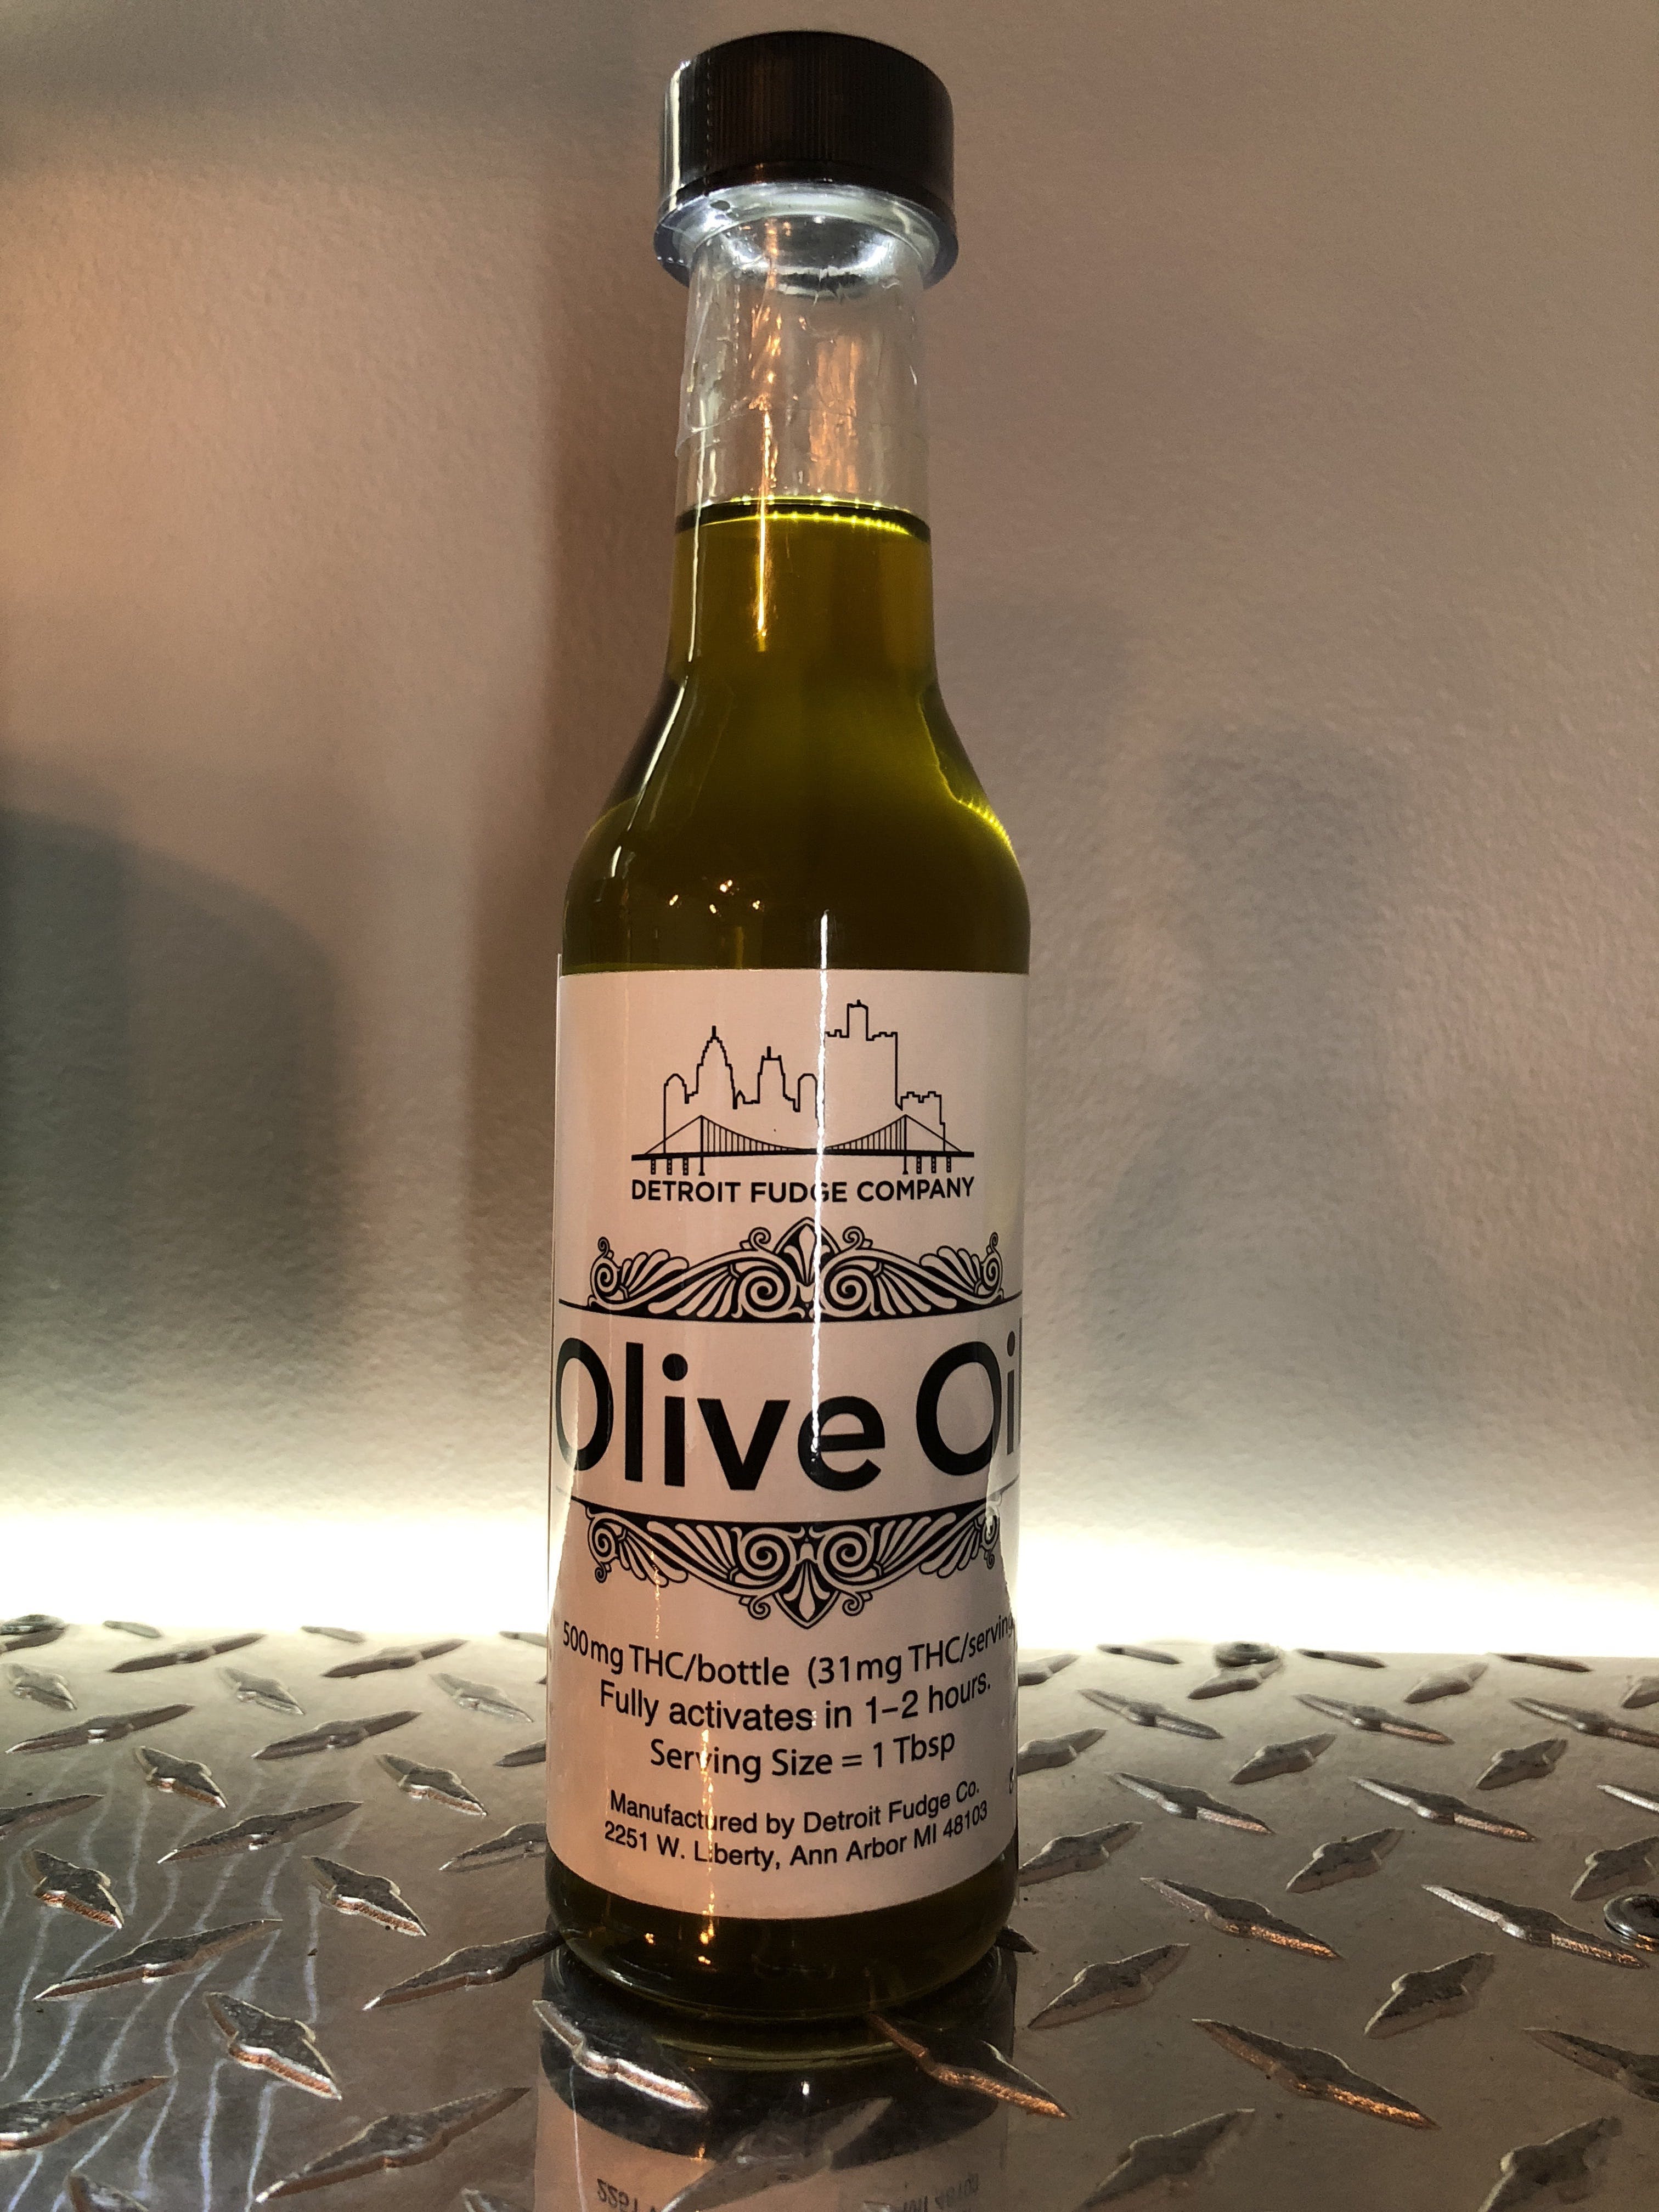 edible-detroit-fudge-company-olive-oil-500mg